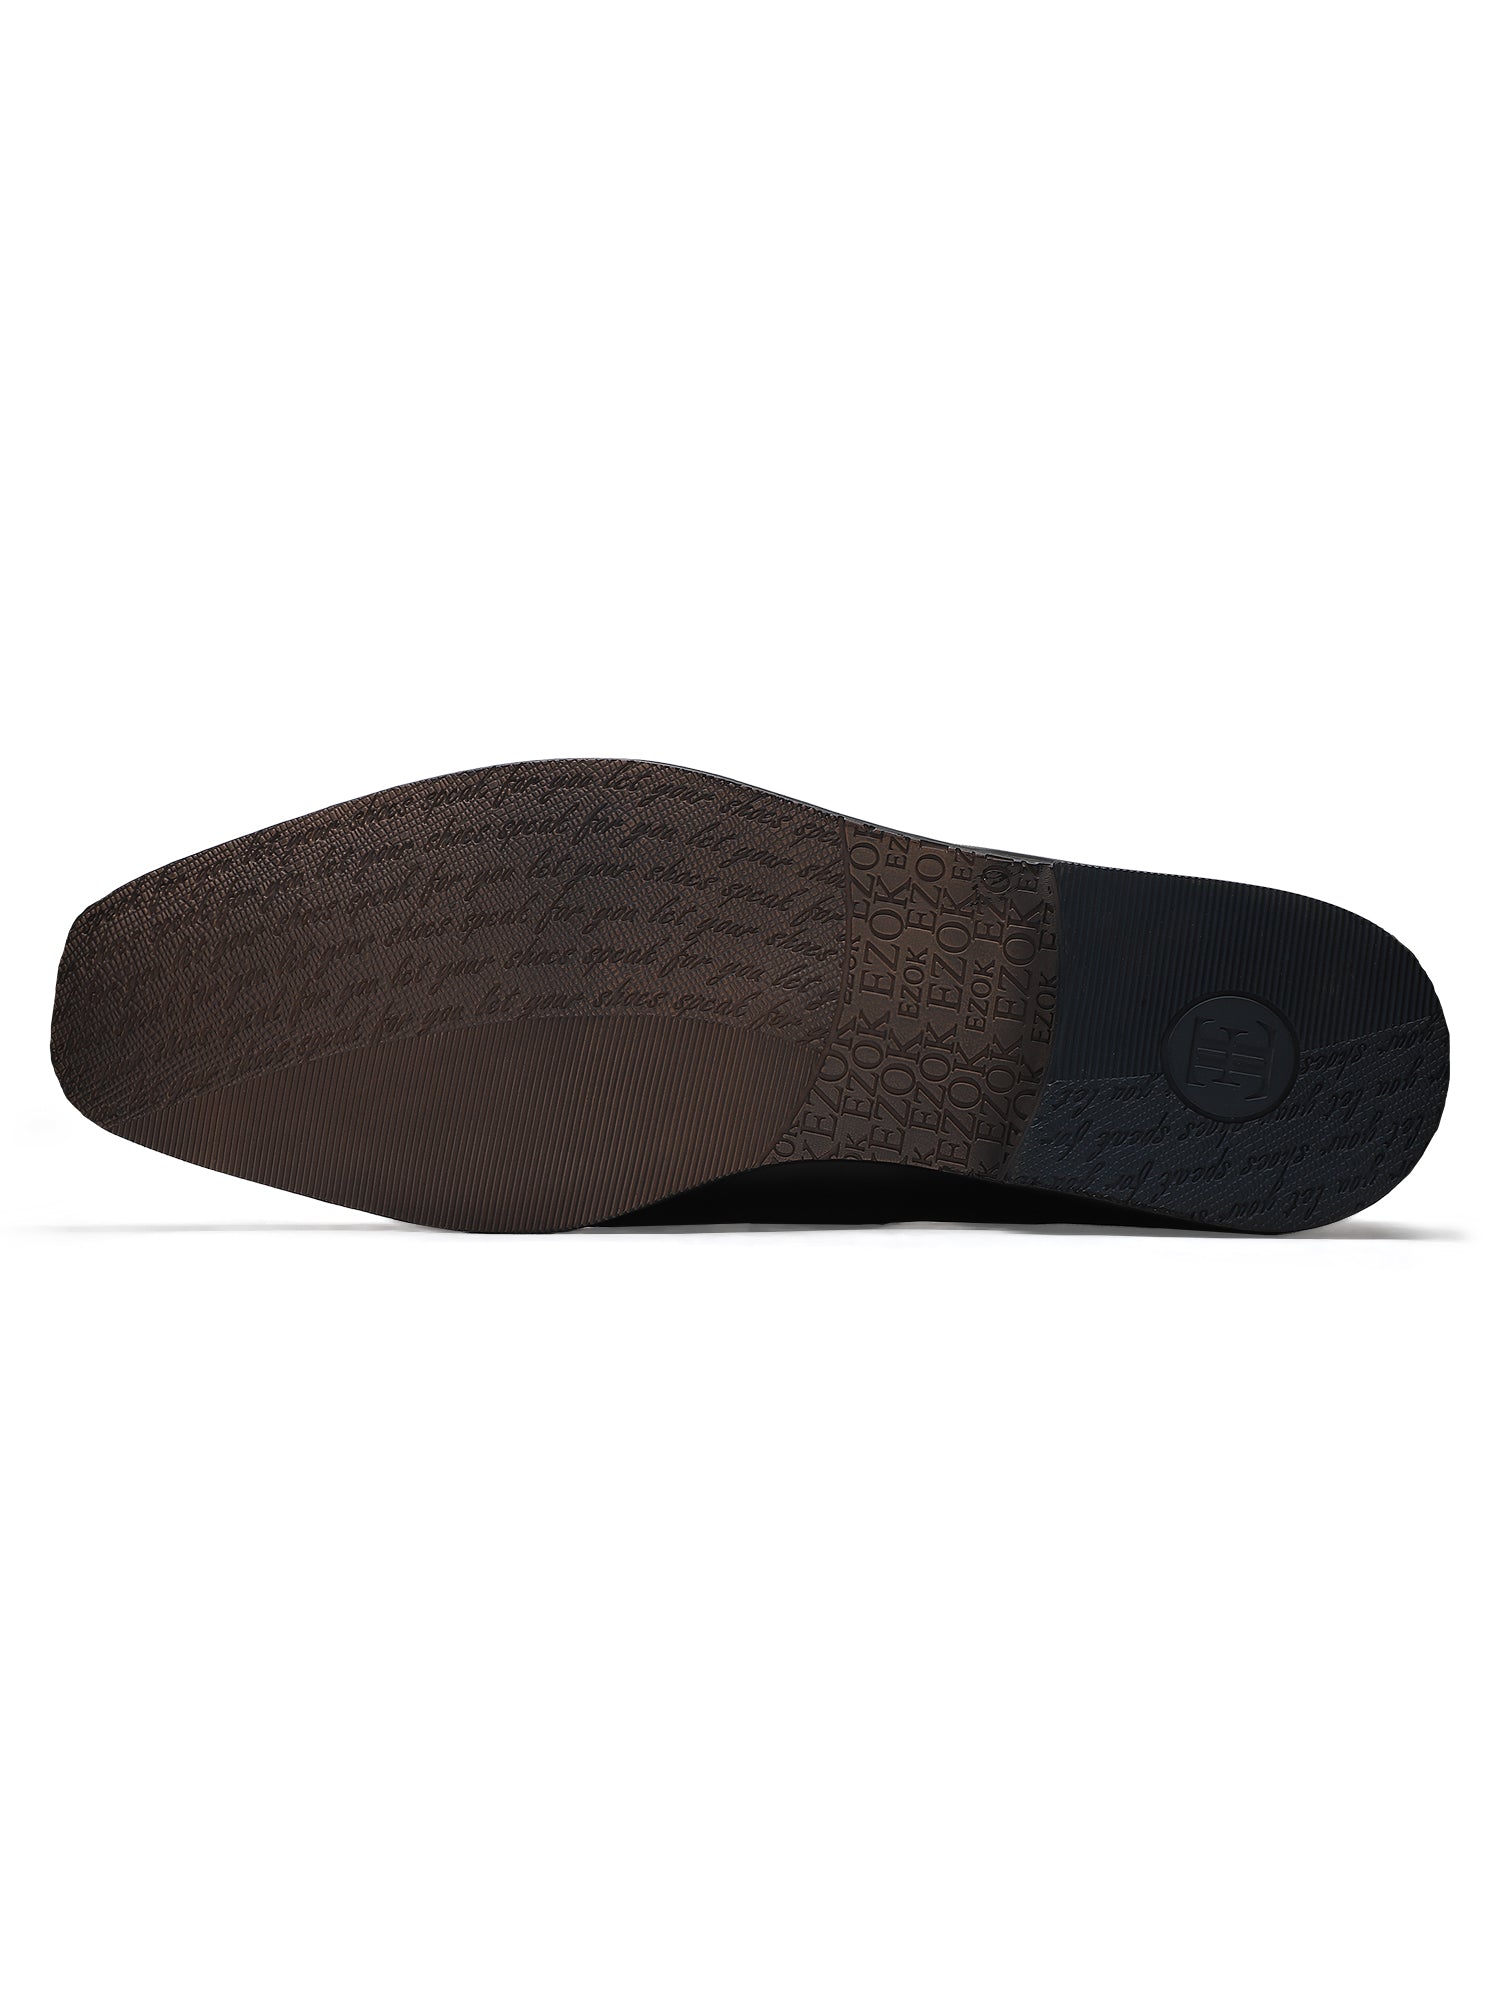 Ezok Men Nova Black Leather Loafers Shoes 2052